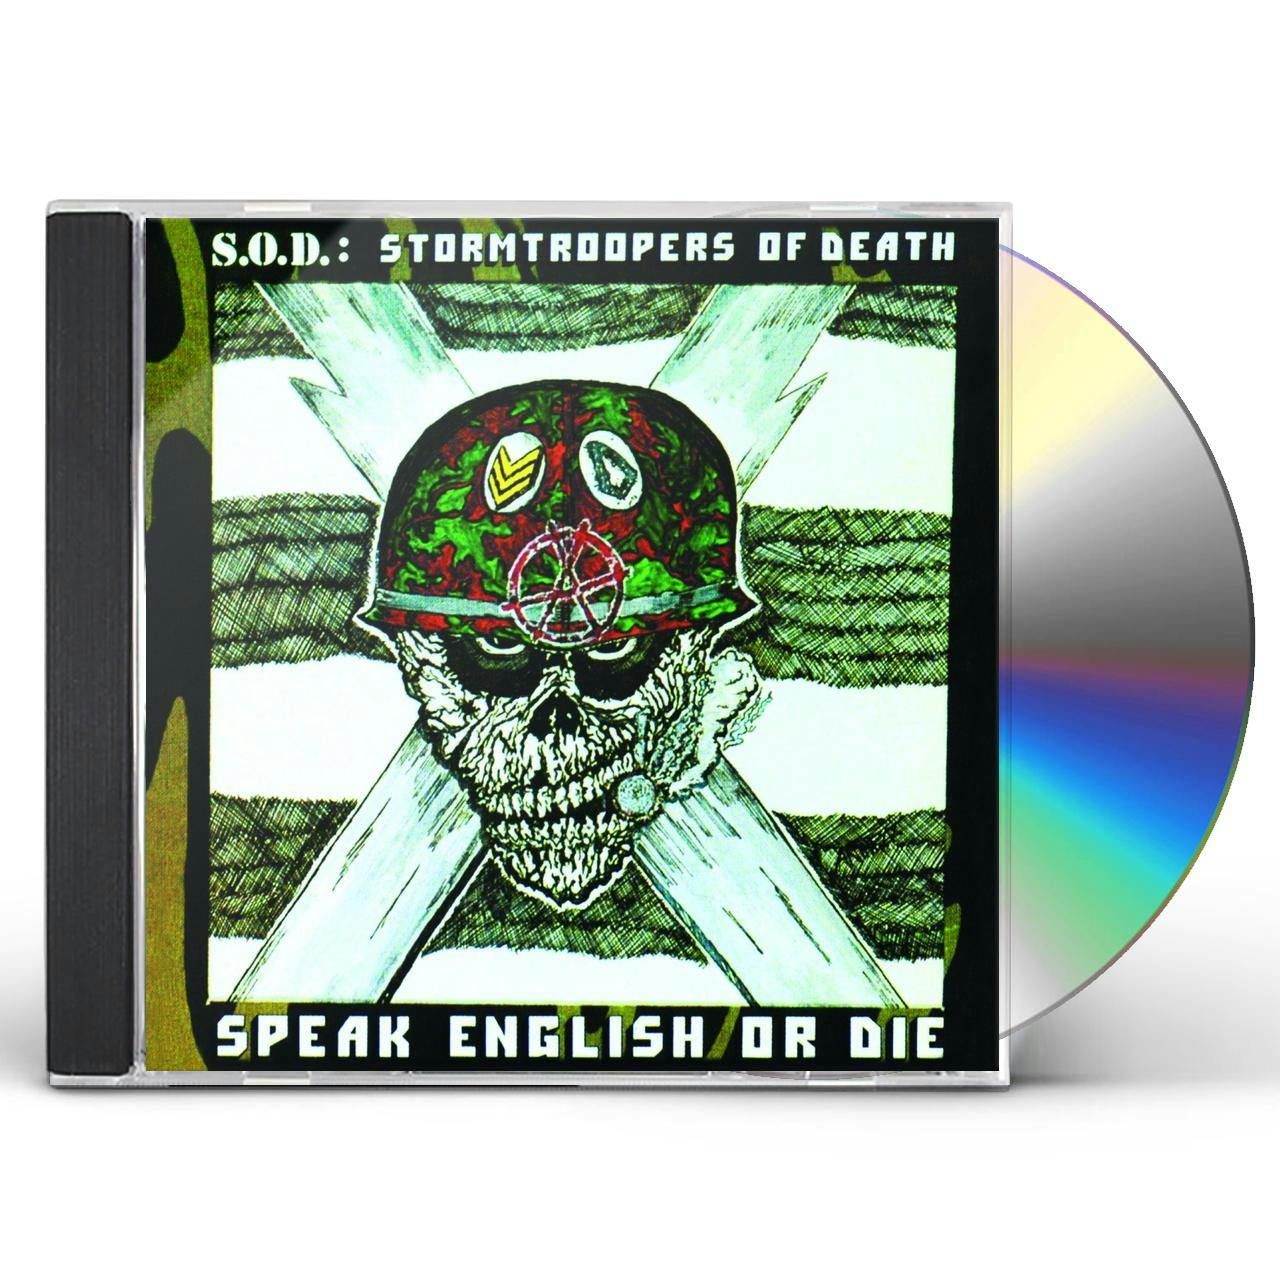 SPEAK ENGLISH OR DIE (30TH ANNIVERSARY EDITION) CD